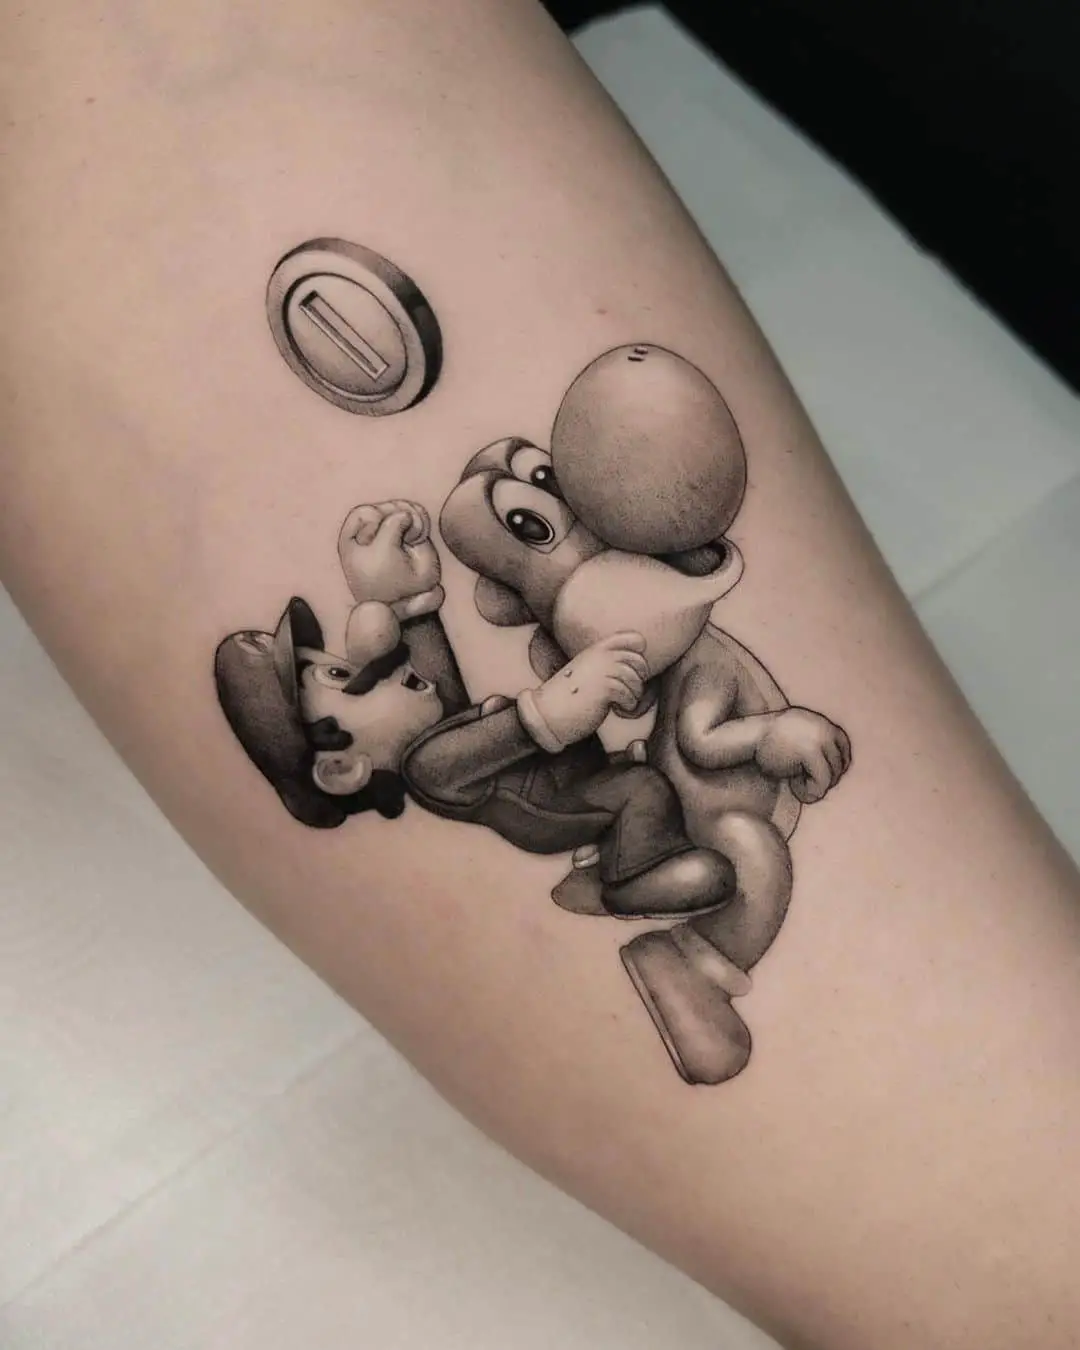 Mario tattoo design by pedroleocorny